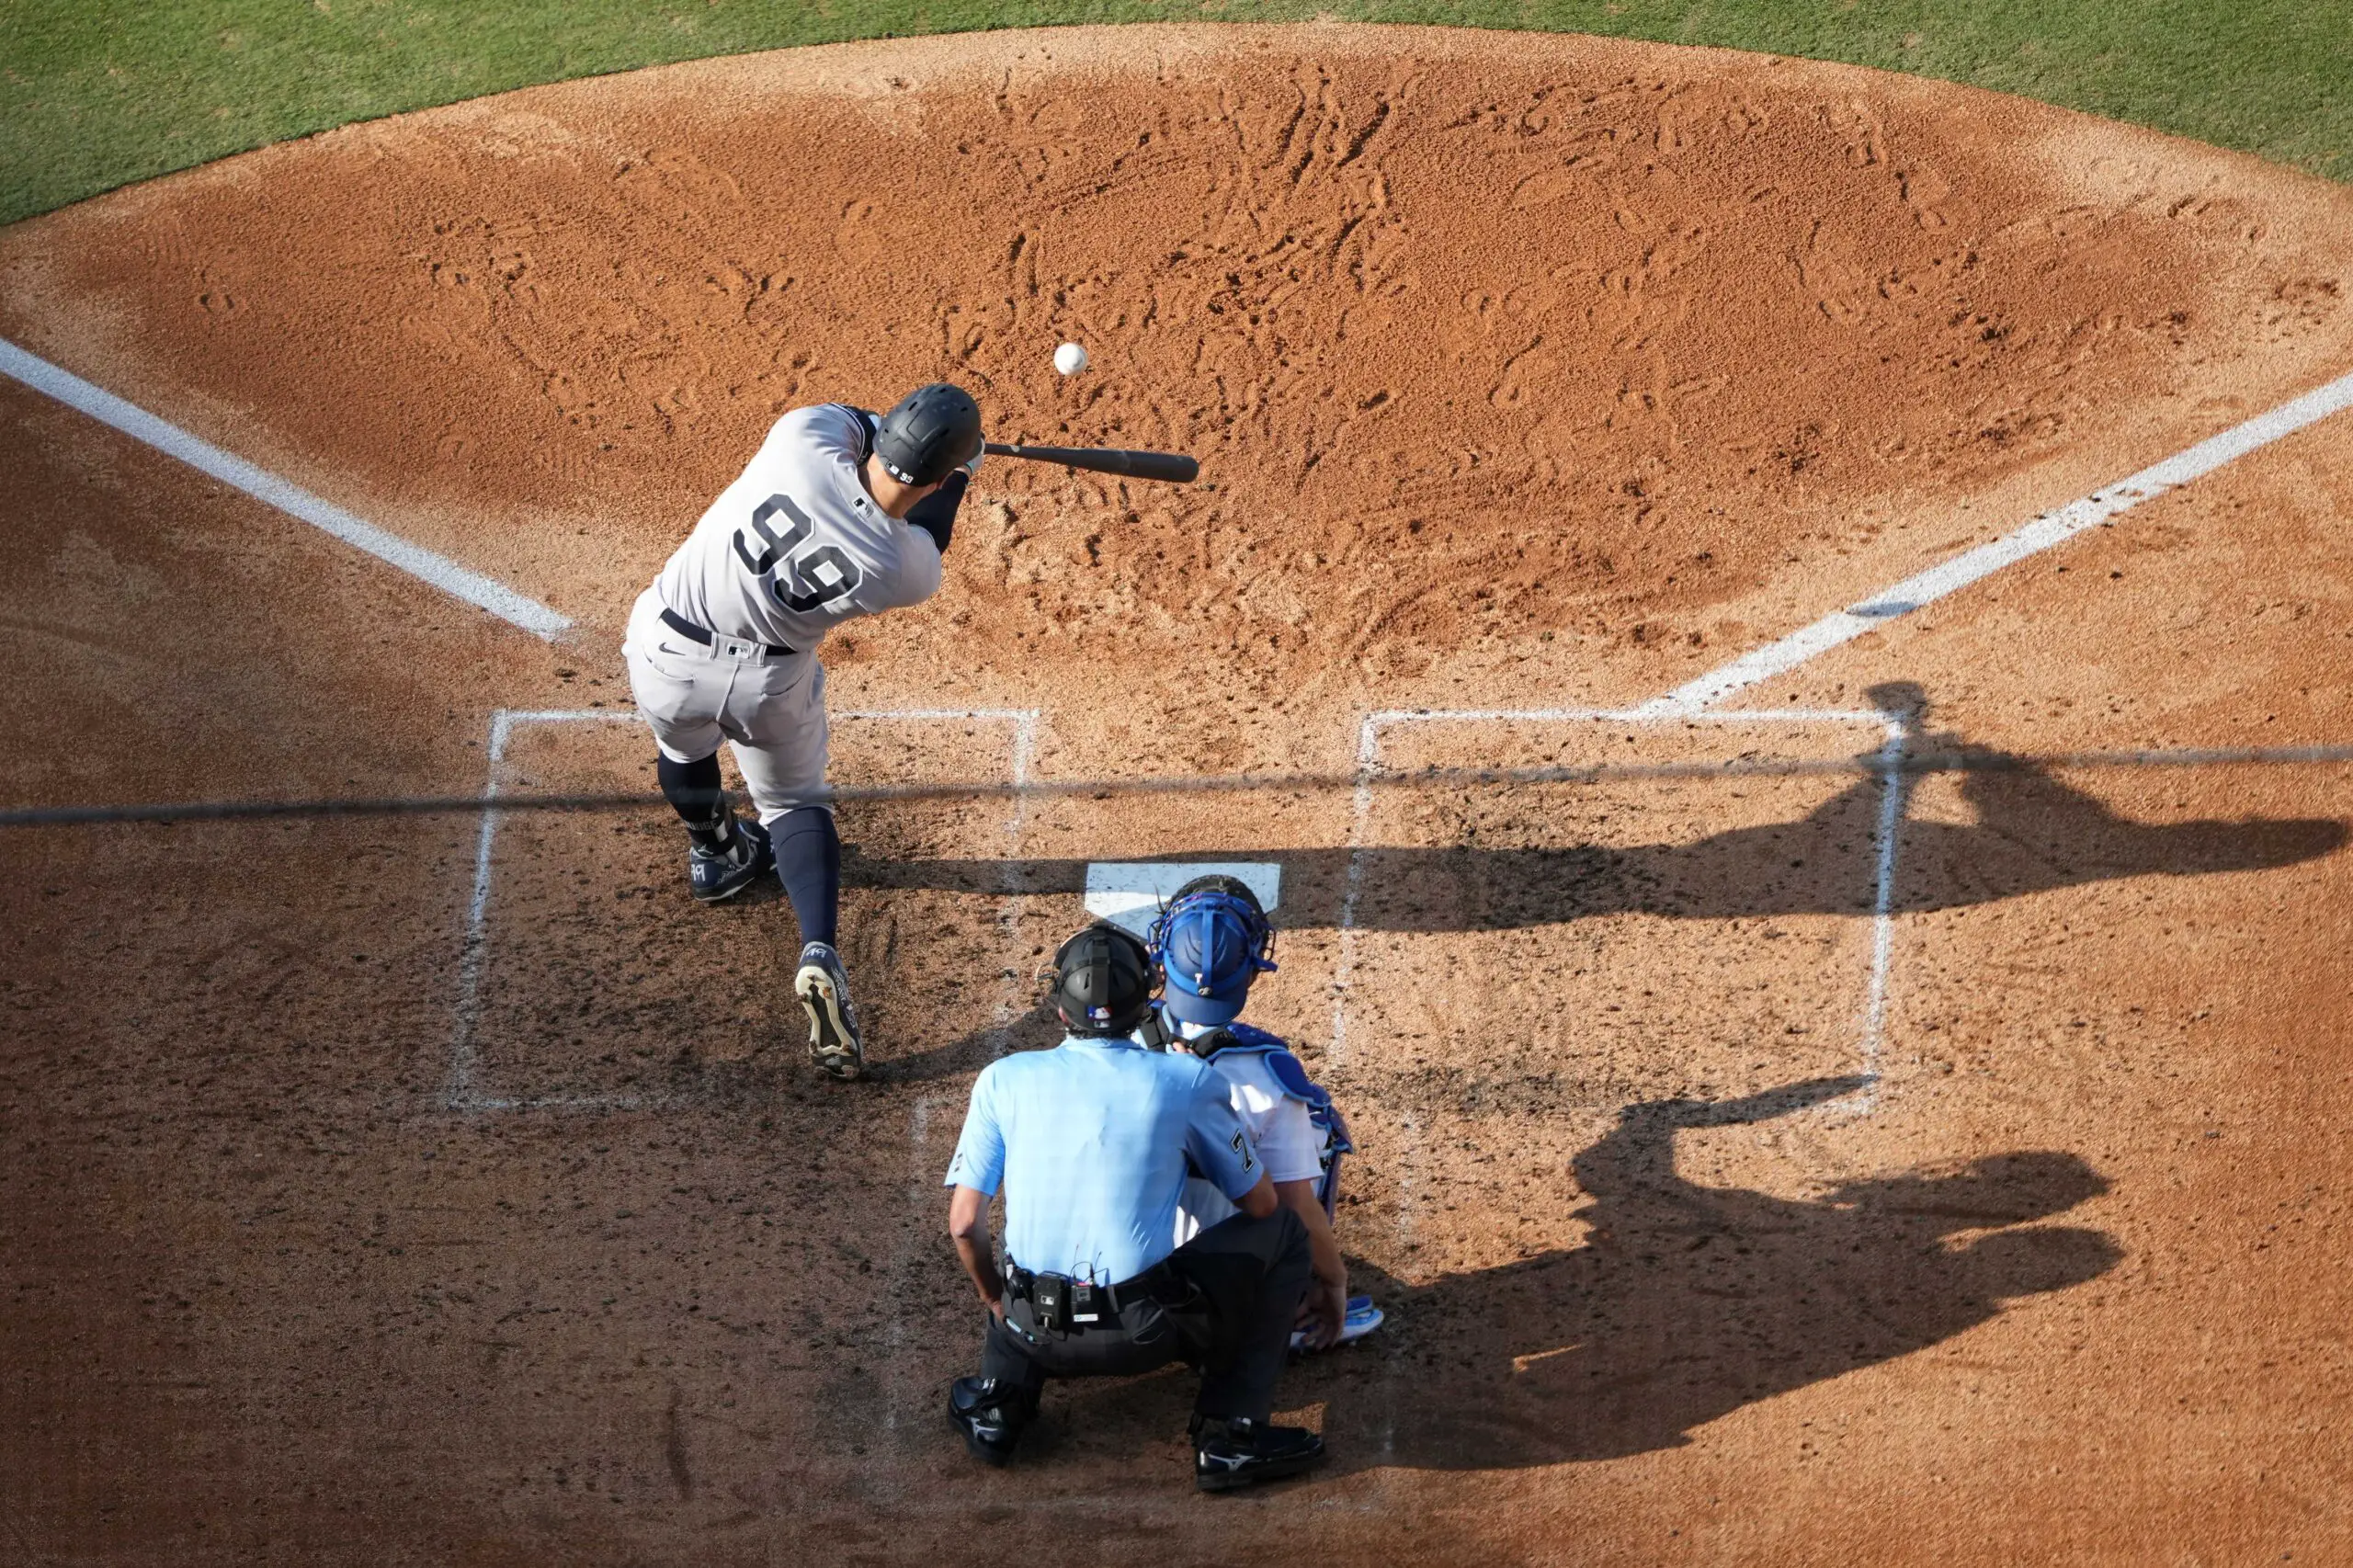 Dodgers Highlights: LA Offense Struggles With RISP, Aaron Judge Plays Hero as Yankees Tie Series